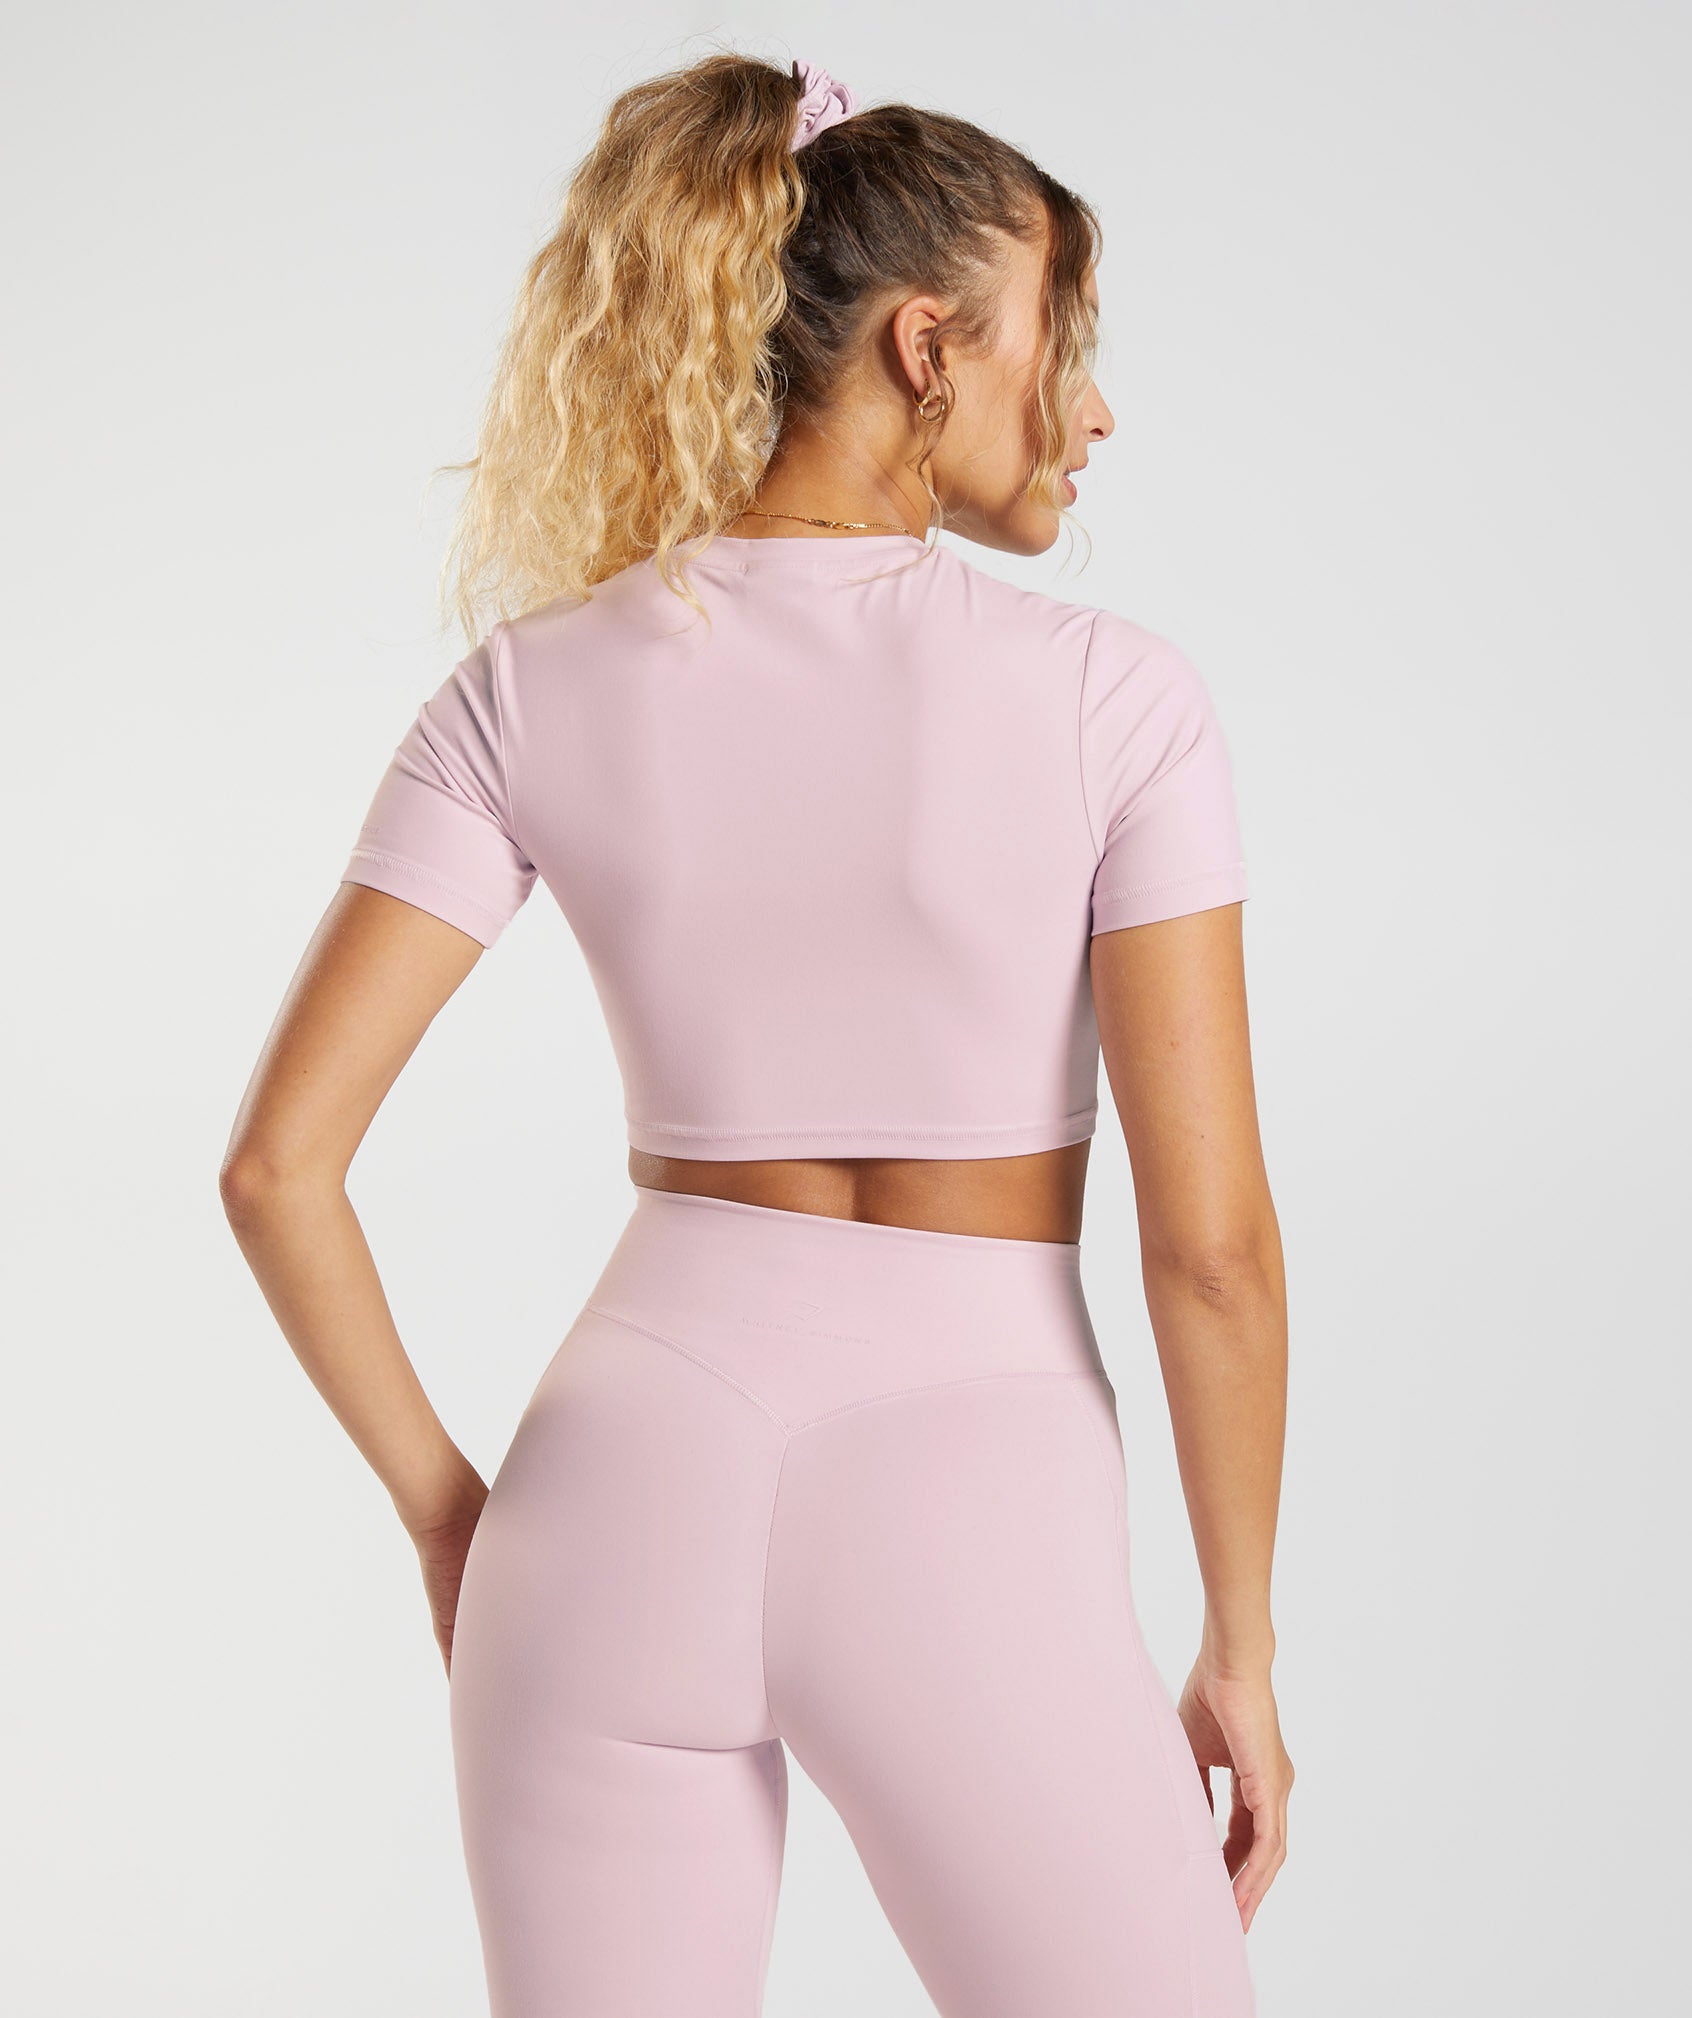 Whitney Short Sleeve Crop Top in Pressed Petal Pink - view 2